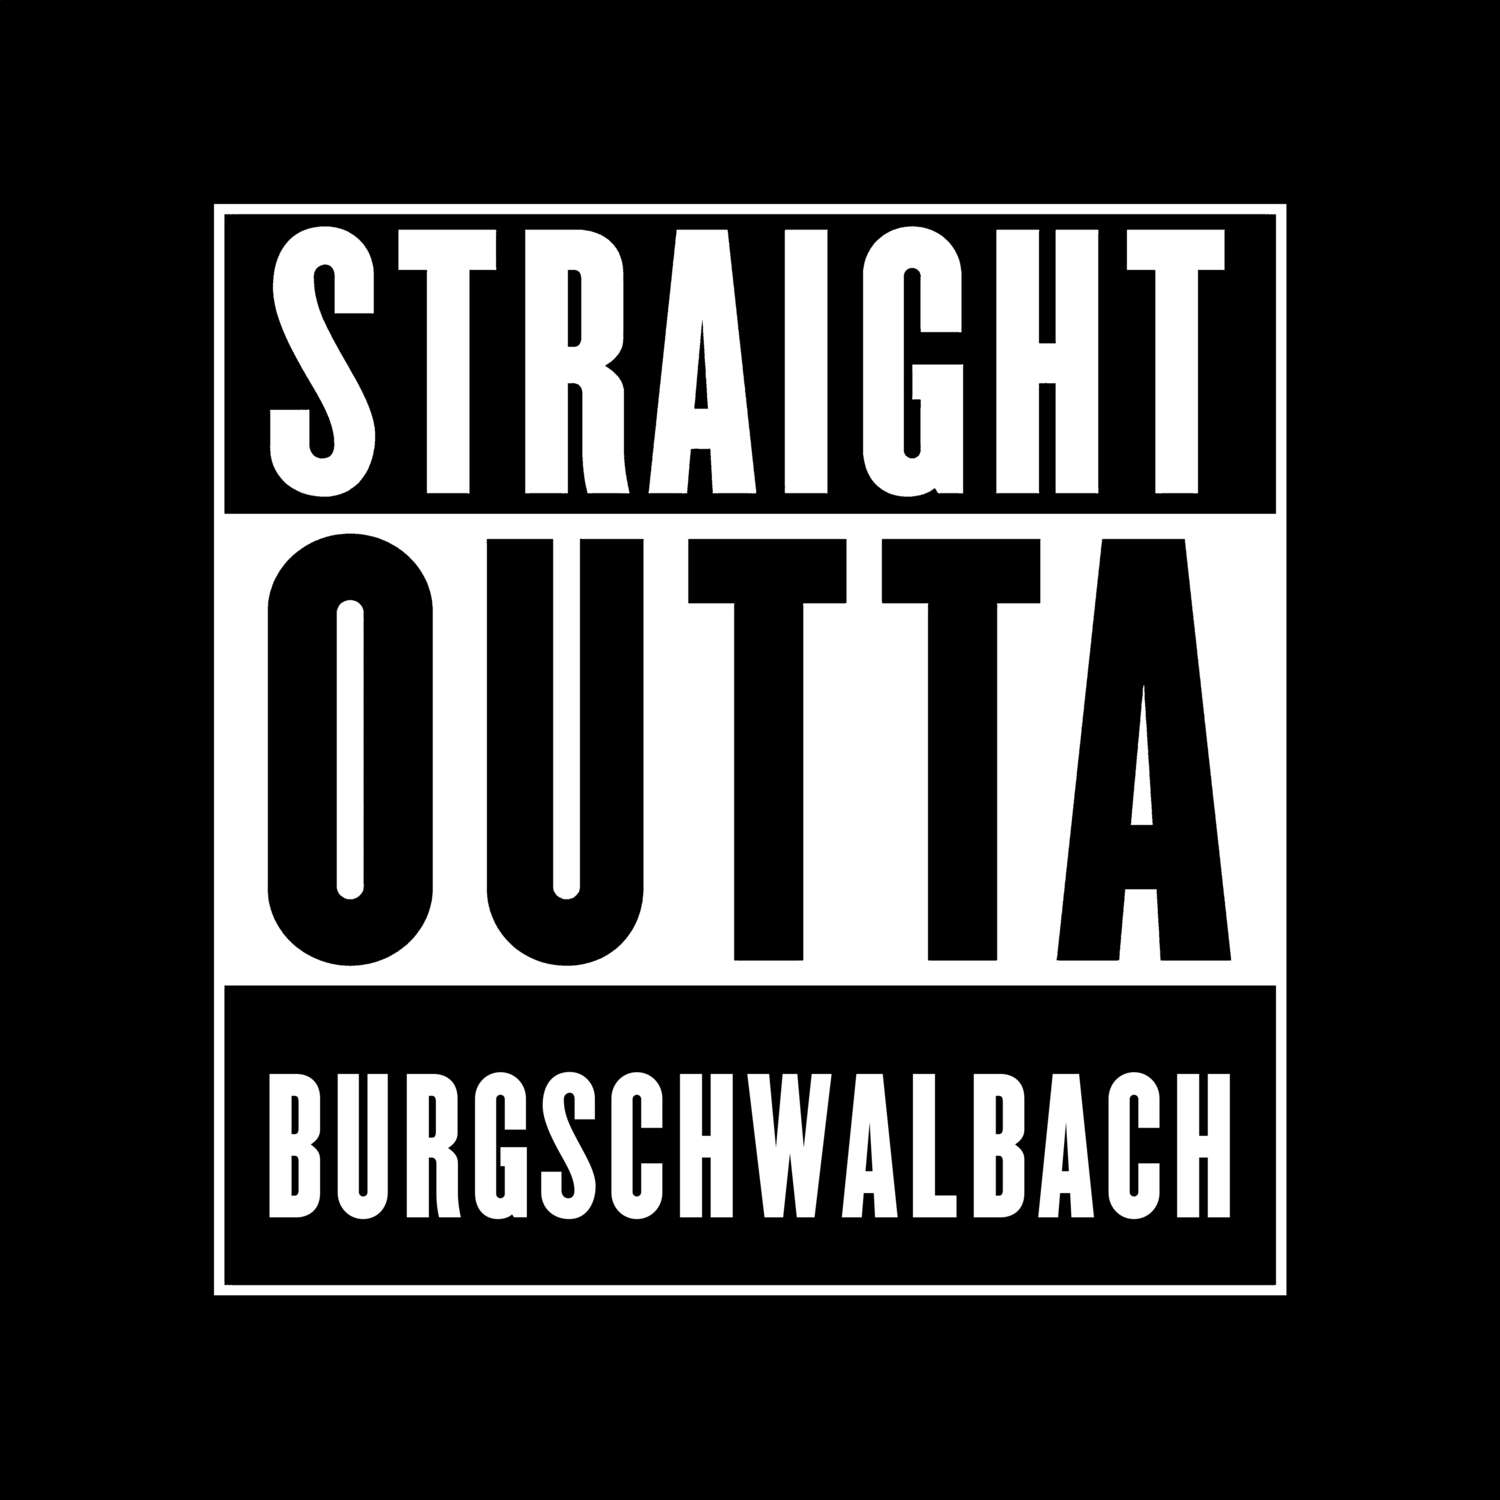 Burgschwalbach T-Shirt »Straight Outta«